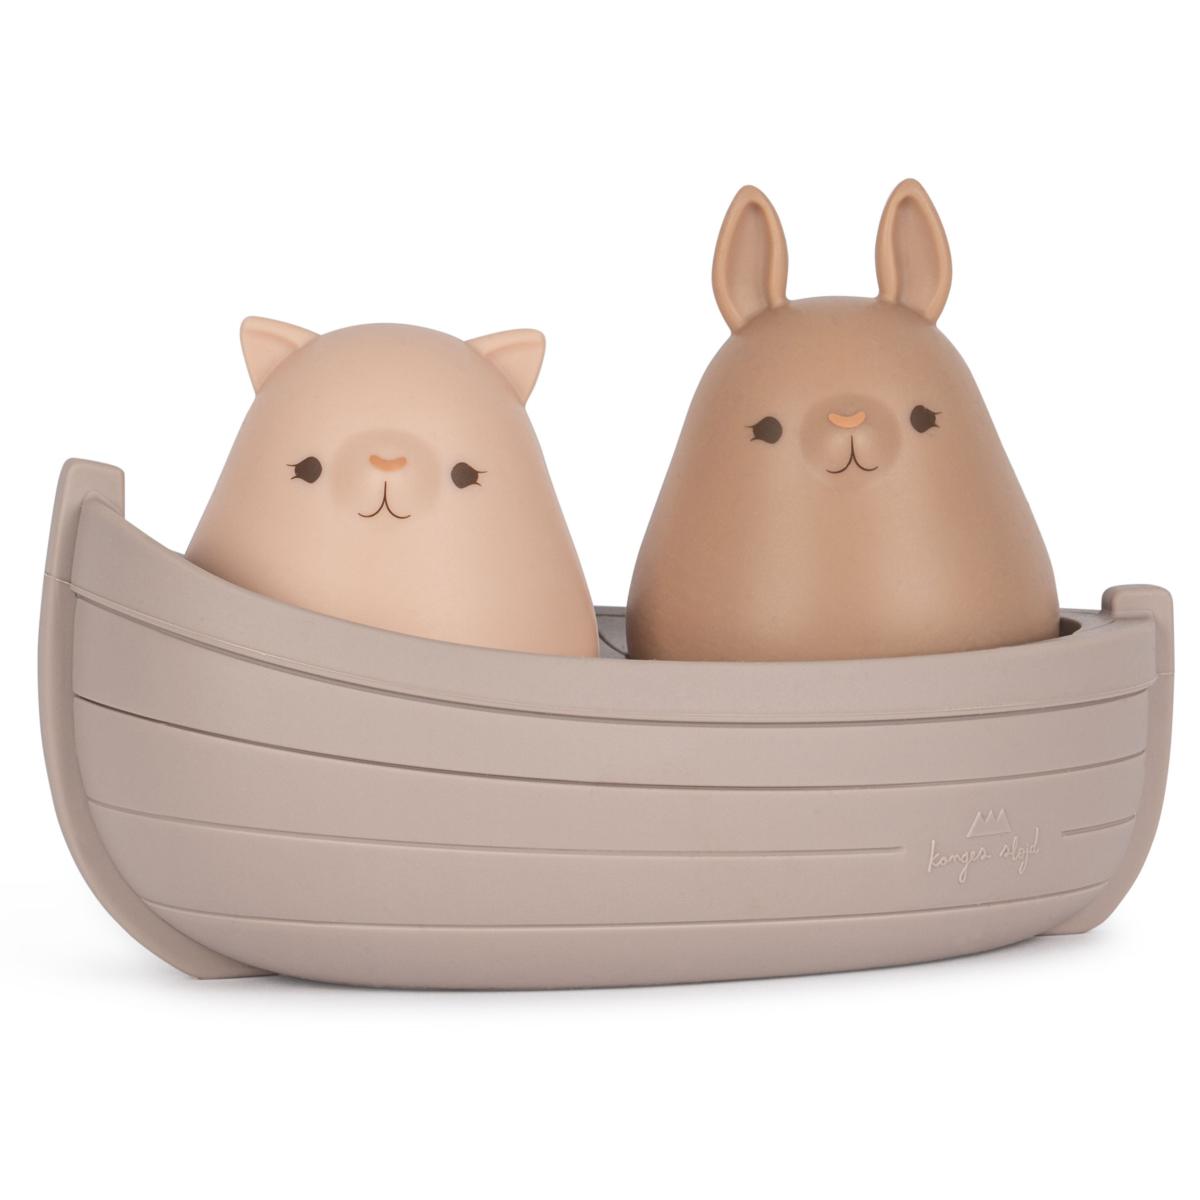 KONGES SLOEJD Bath toys Rabbit Kitten Lilac pink boat KONGES SLOJD